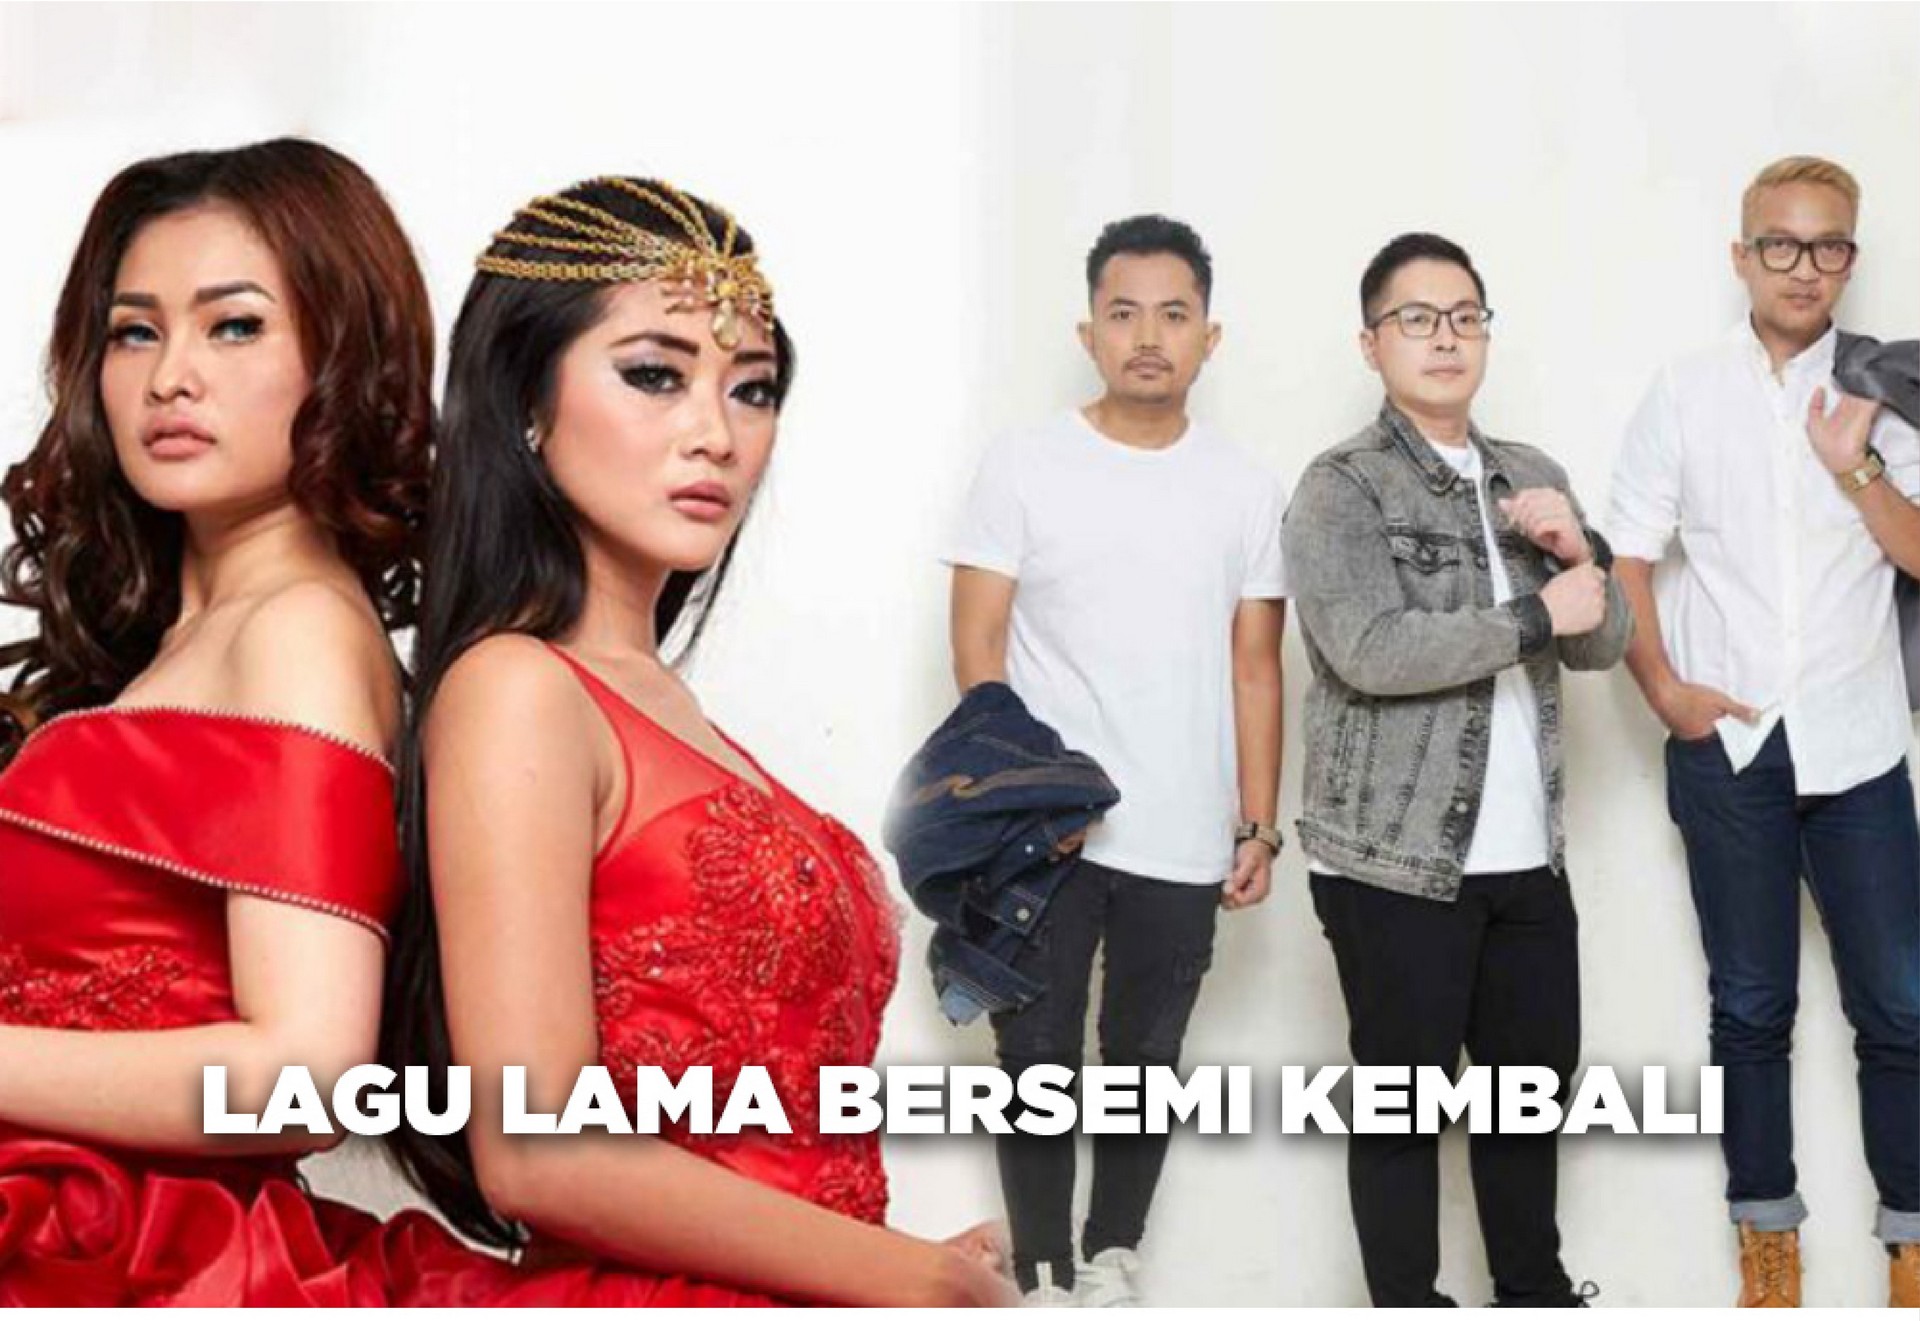 Duo Anggrek dan Kerispatih Masuk Chart Indonesia Top YouTube